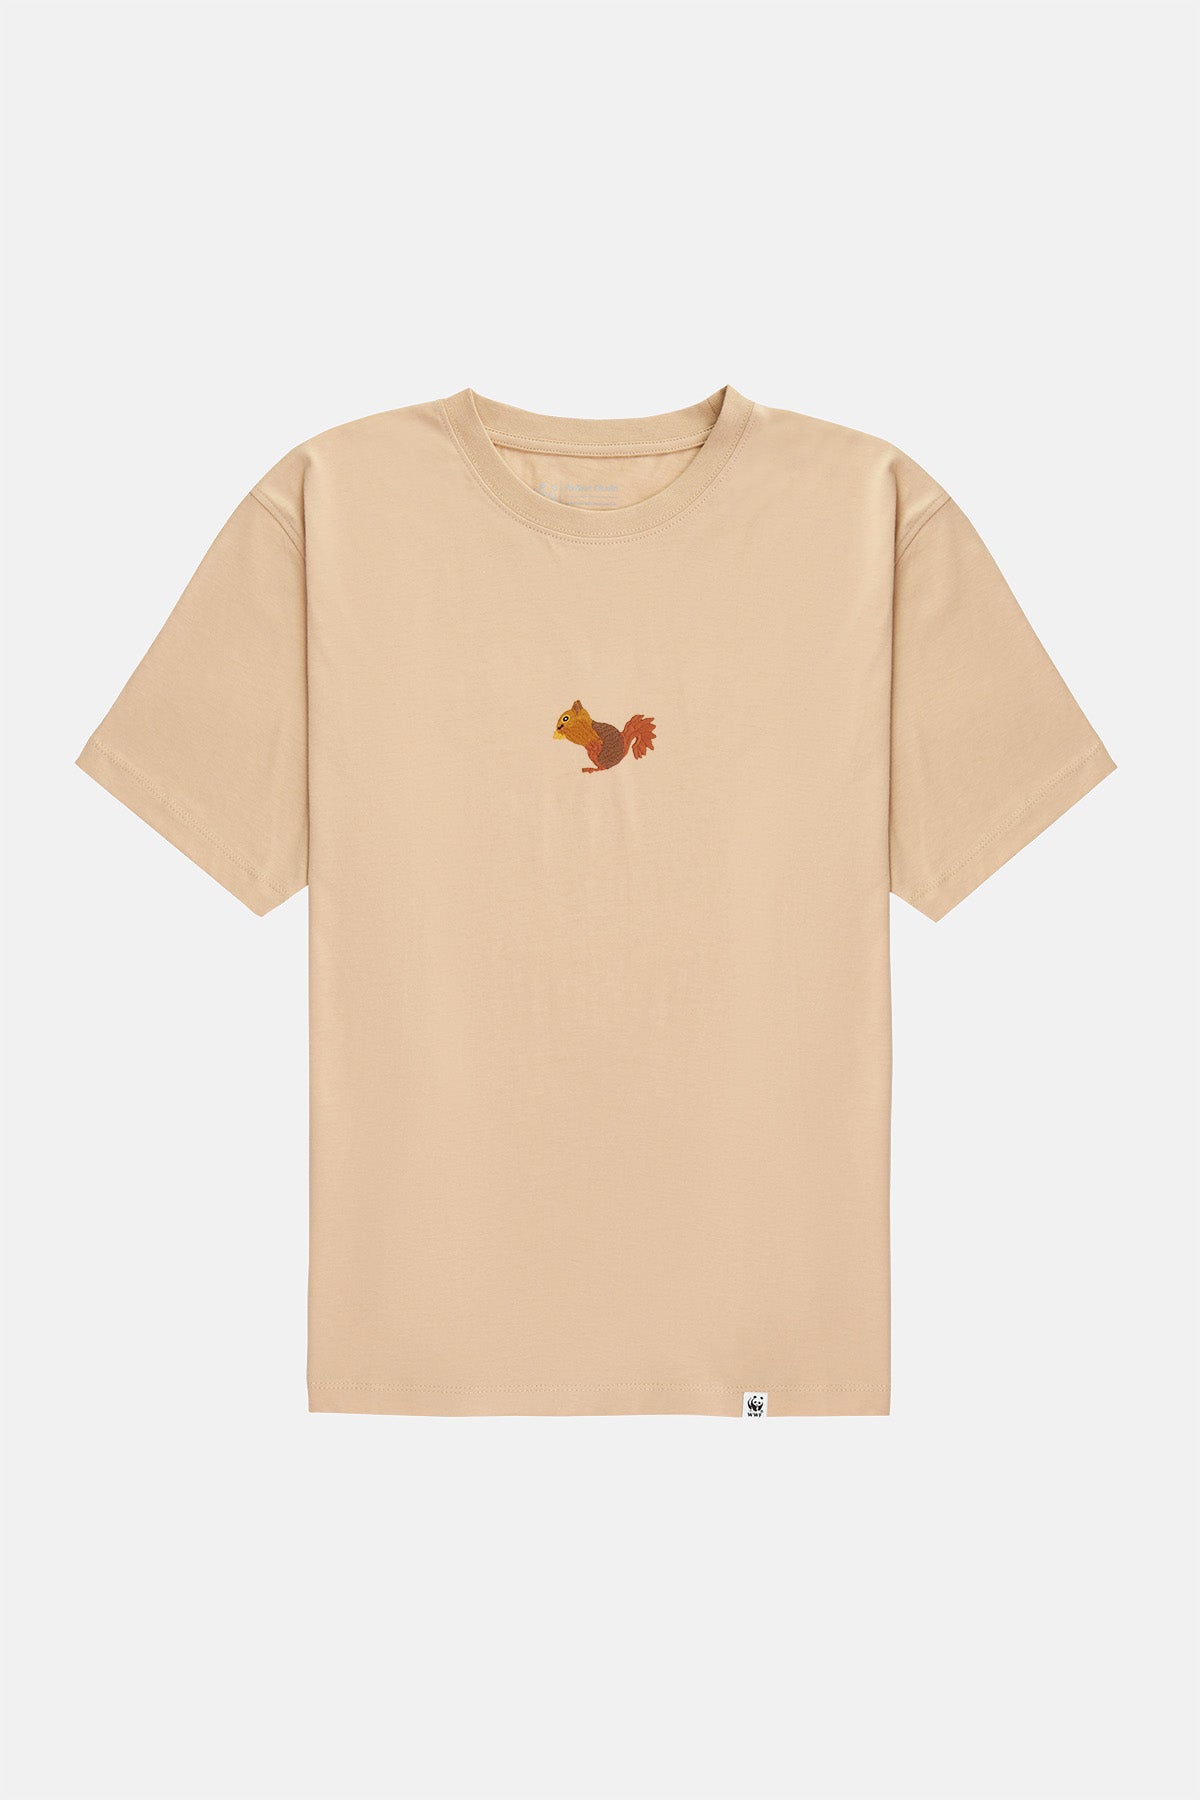 Sincap Soft T-Shirt  - Parşömen Bej